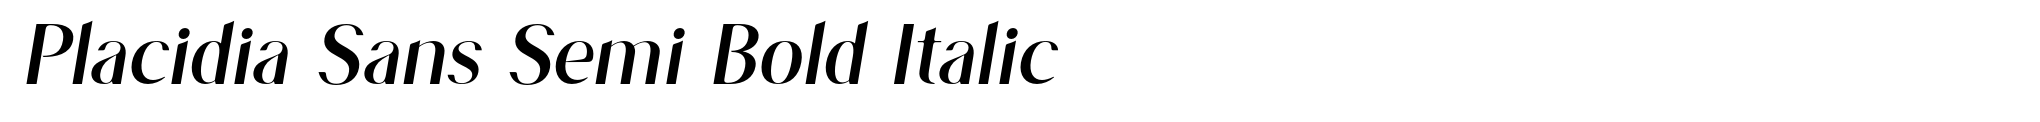 Placidia Sans Semi Bold Italic image